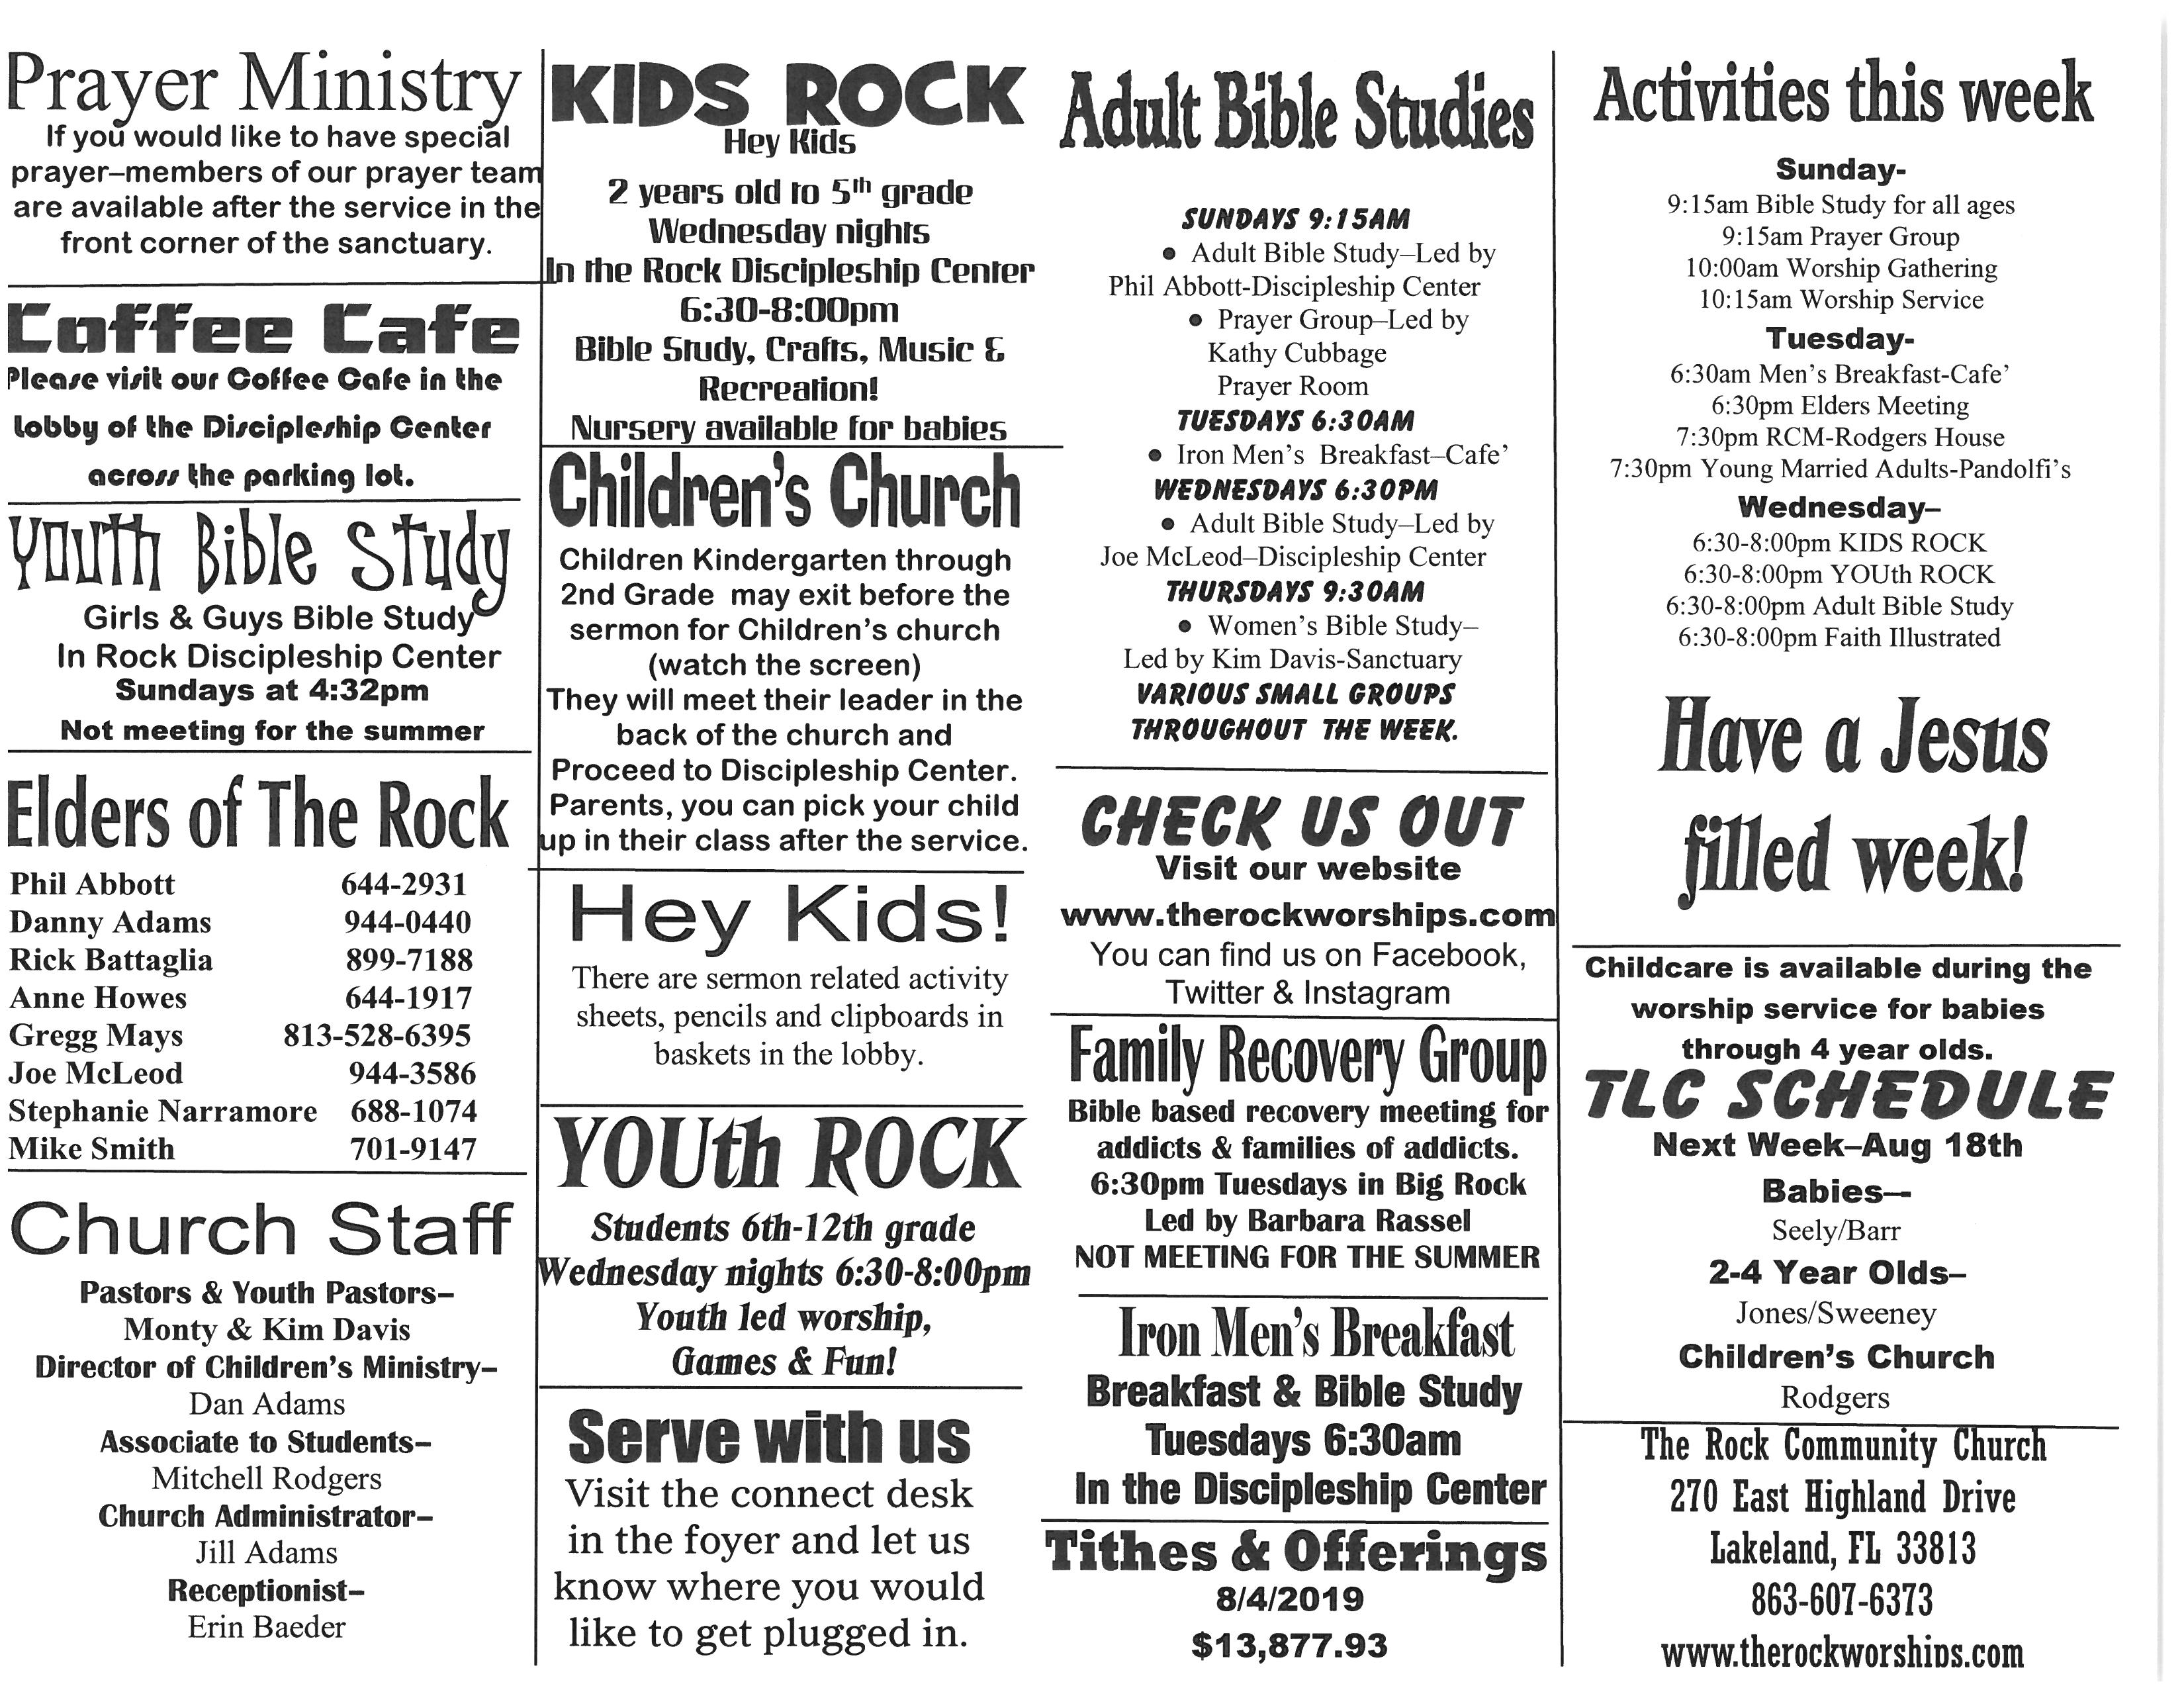 Resources - The Rock Community Church - Lakeland, FL